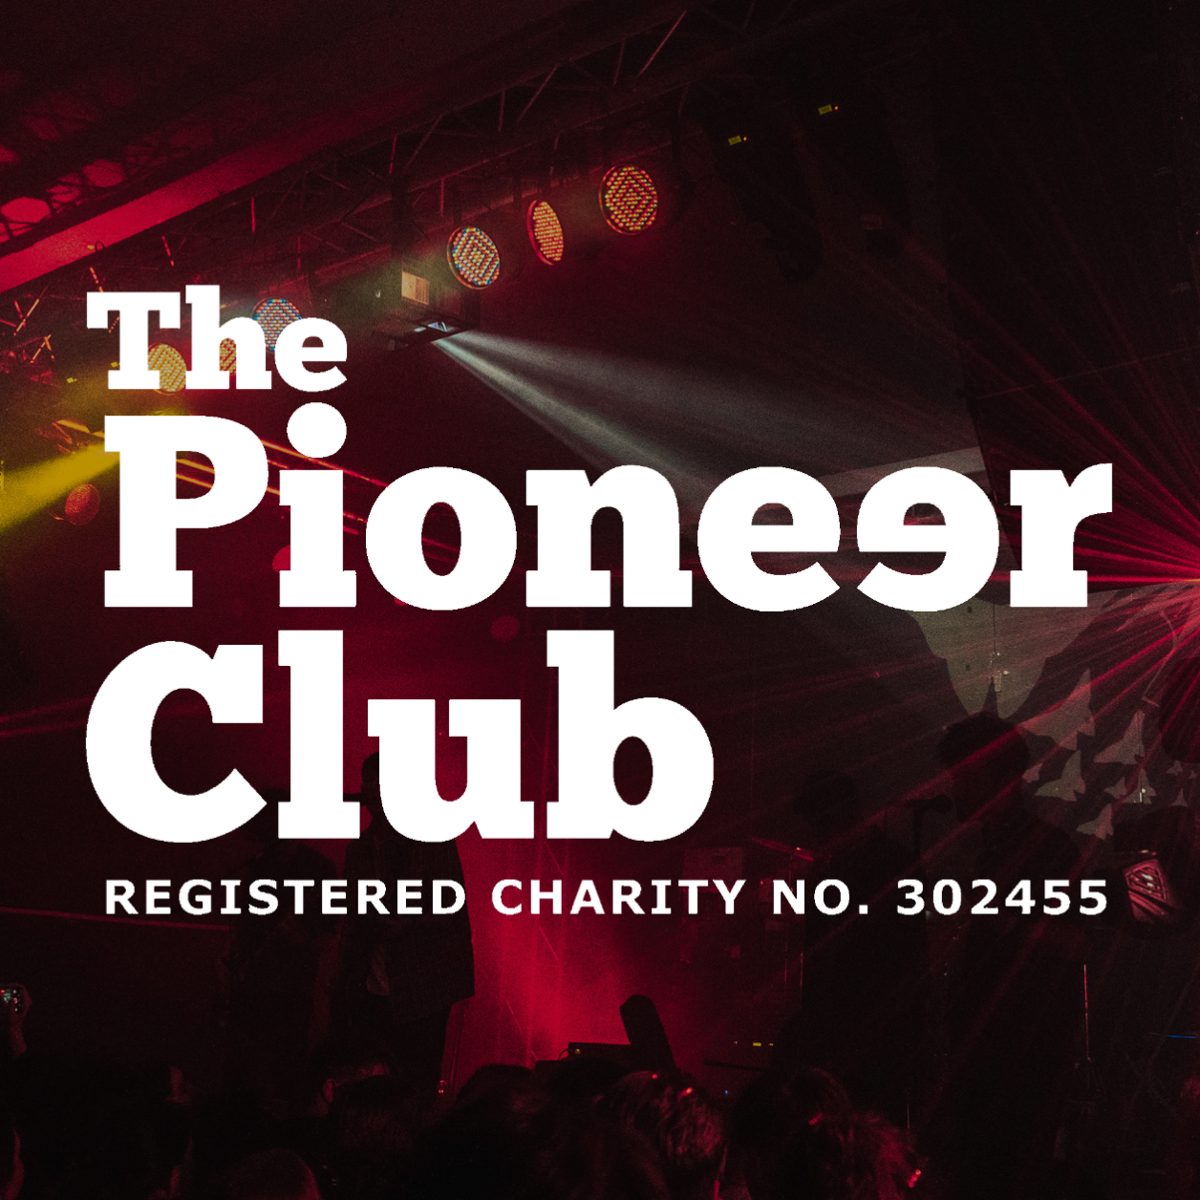 The Pioneer Club